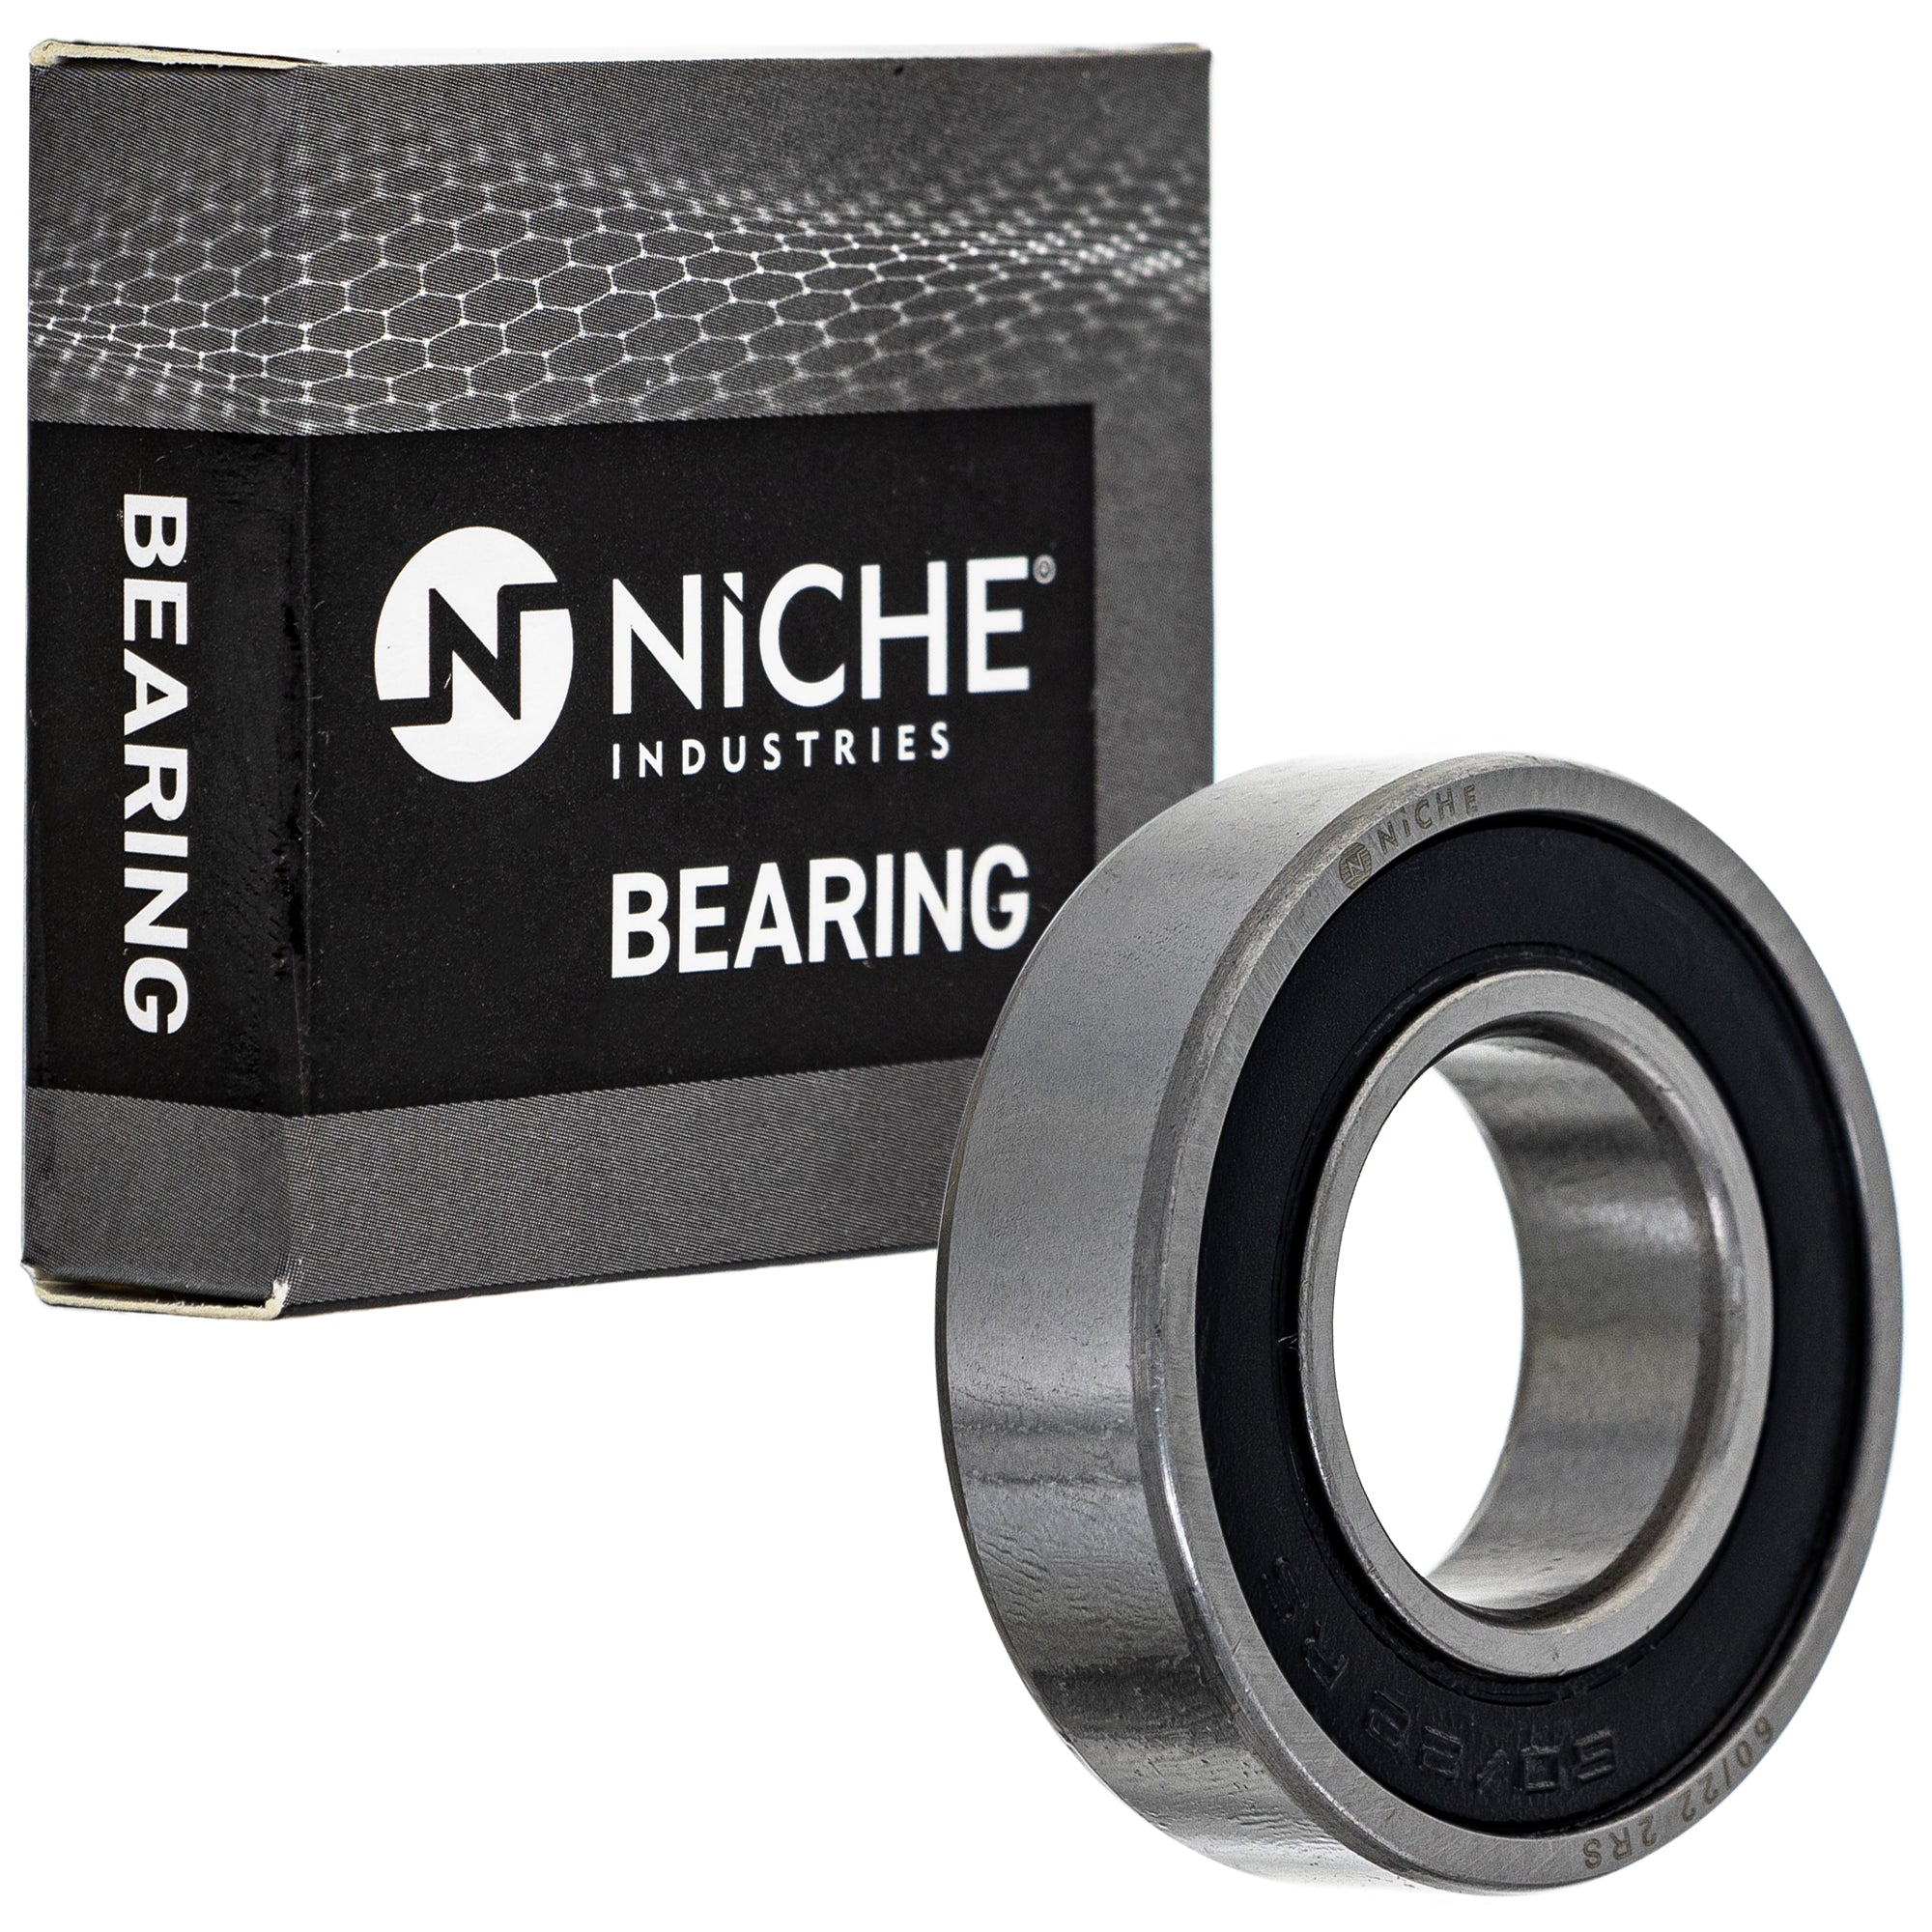 NICHE 519-CBB2267R Bearing 10-Pack for zOTHER TRX700XX Rincon Pilot